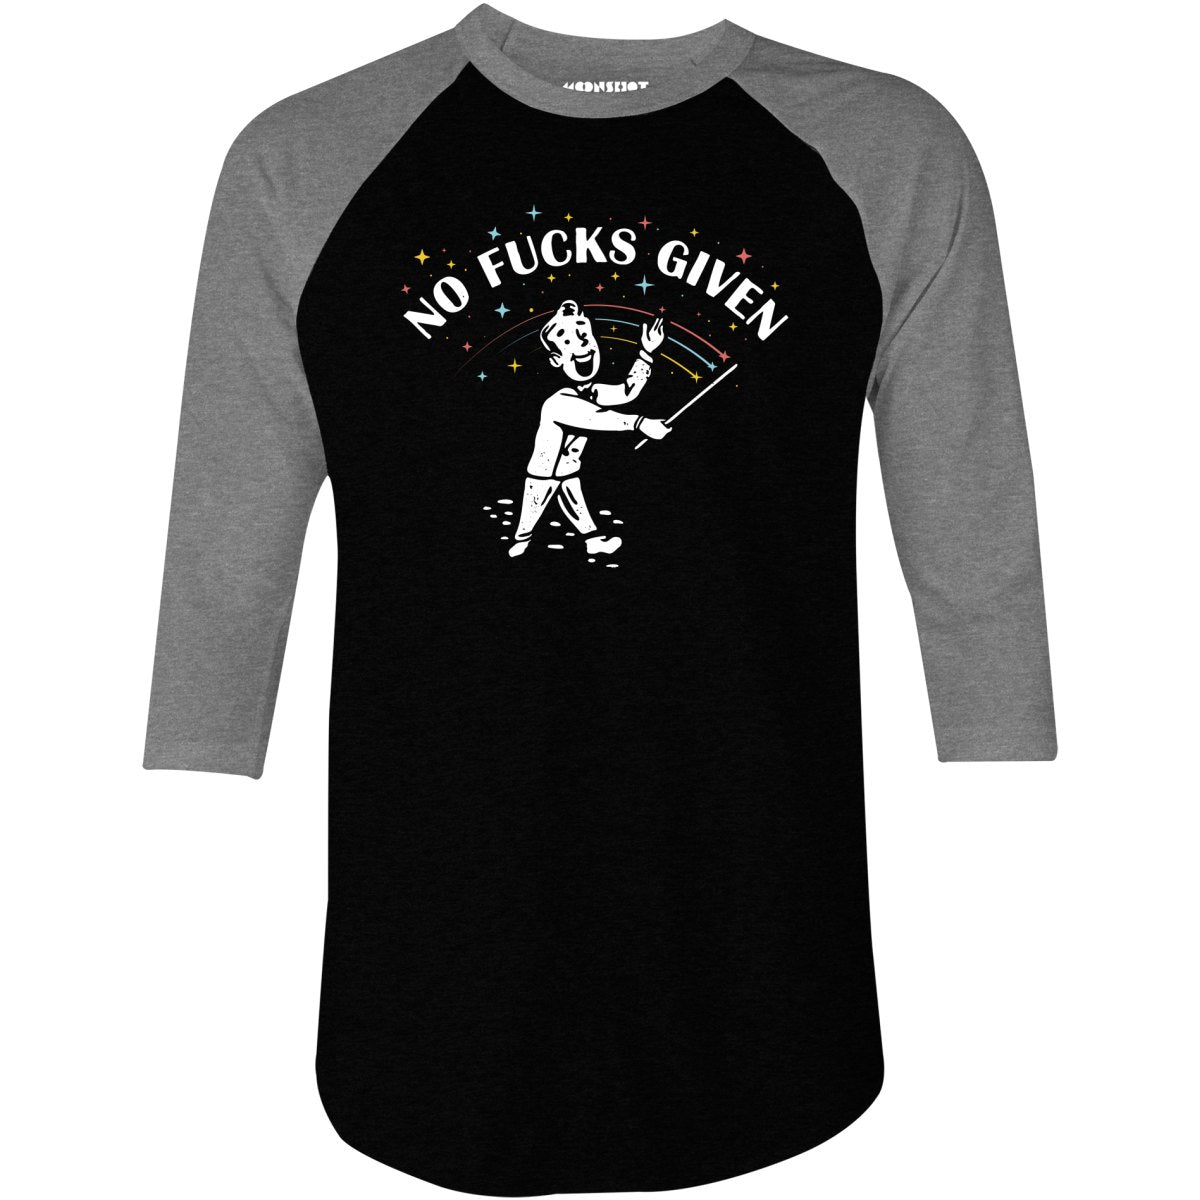 No Fucks Given - 3/4 Sleeve Raglan T-Shirt